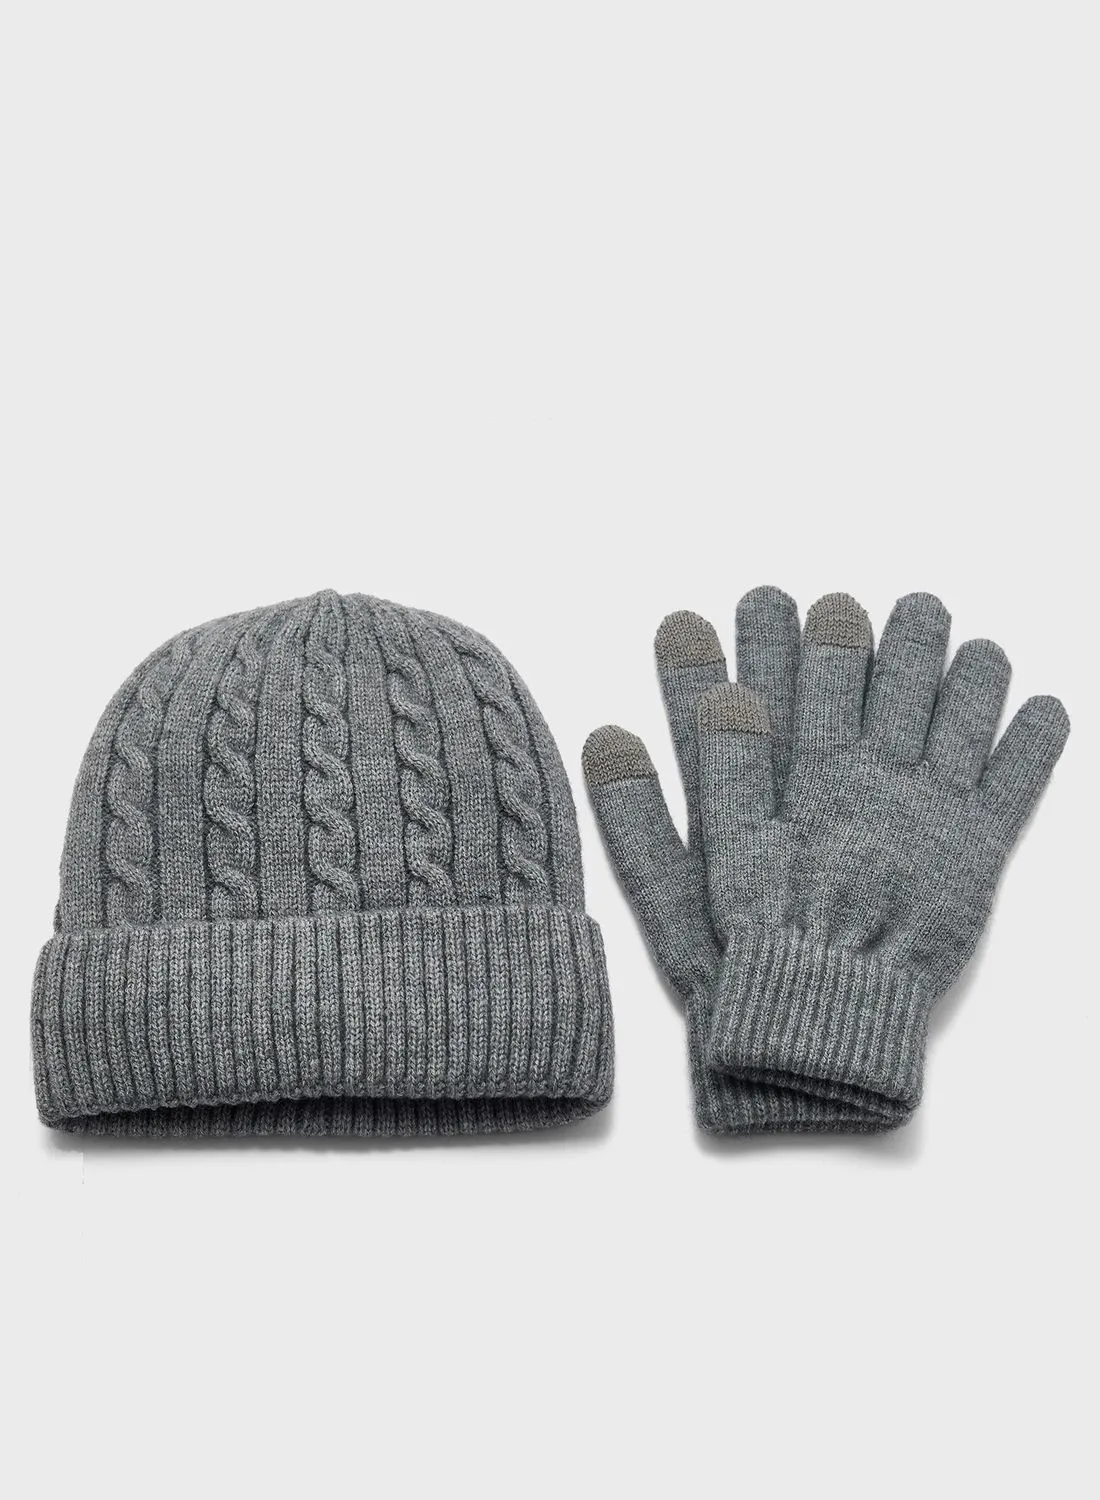 Robert Wood 2 Pack Knitted Winter Beanie & Gloves Set